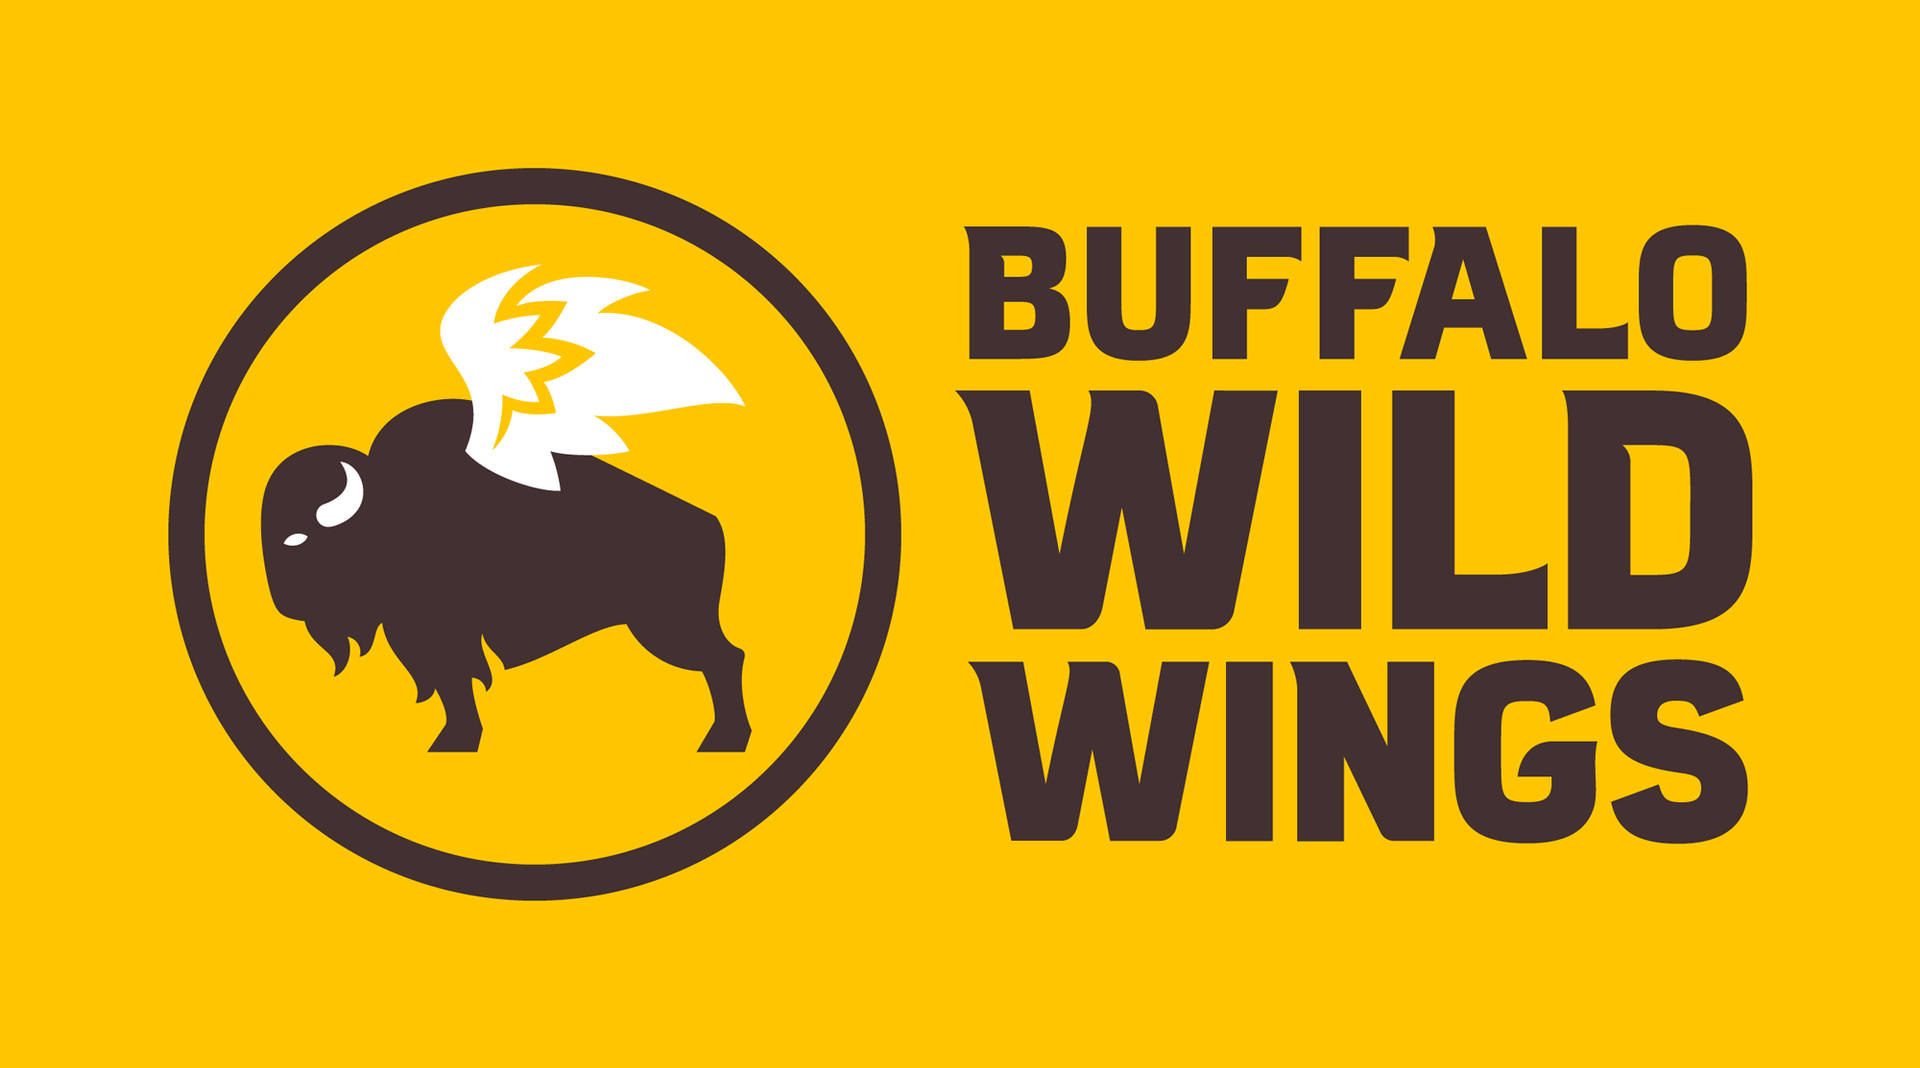 Buffalo Wild Wings Yellow Poster Wallpaper